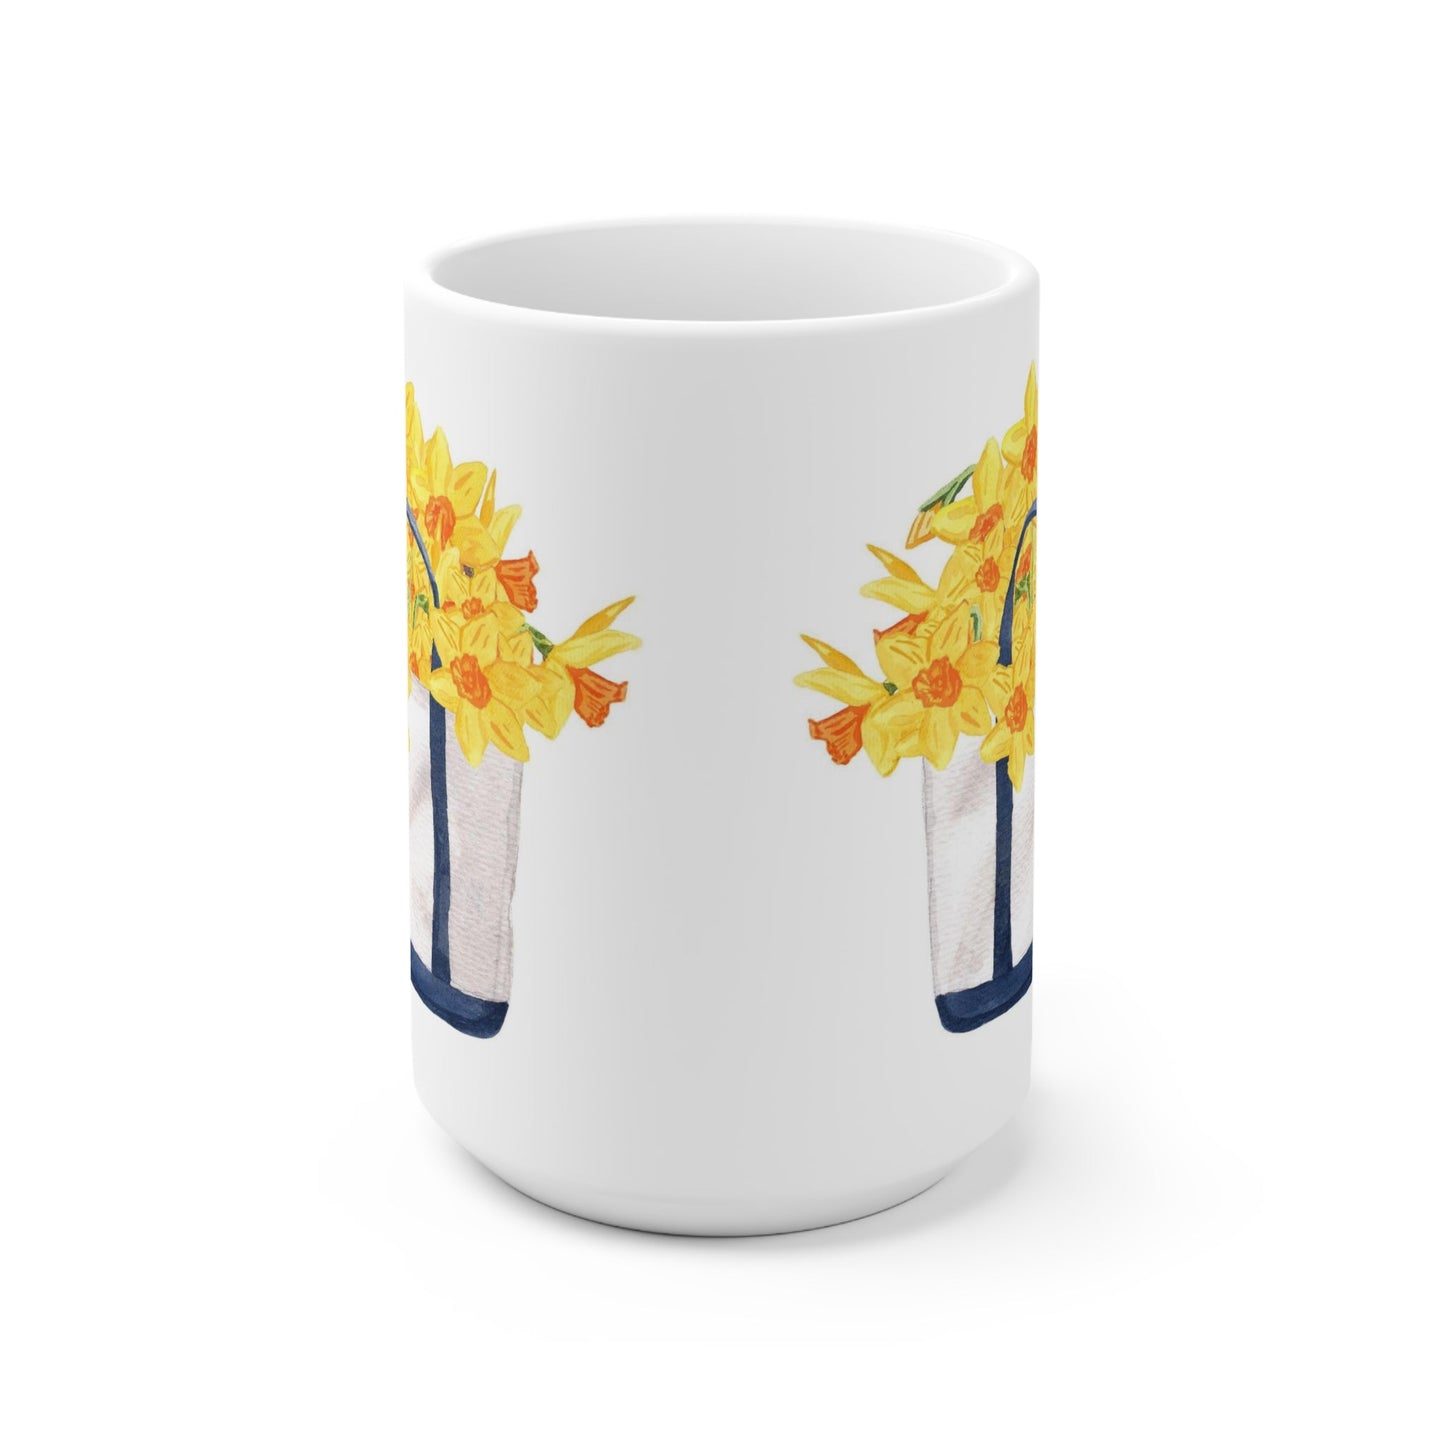 Daffodil Days Ceramic Mug